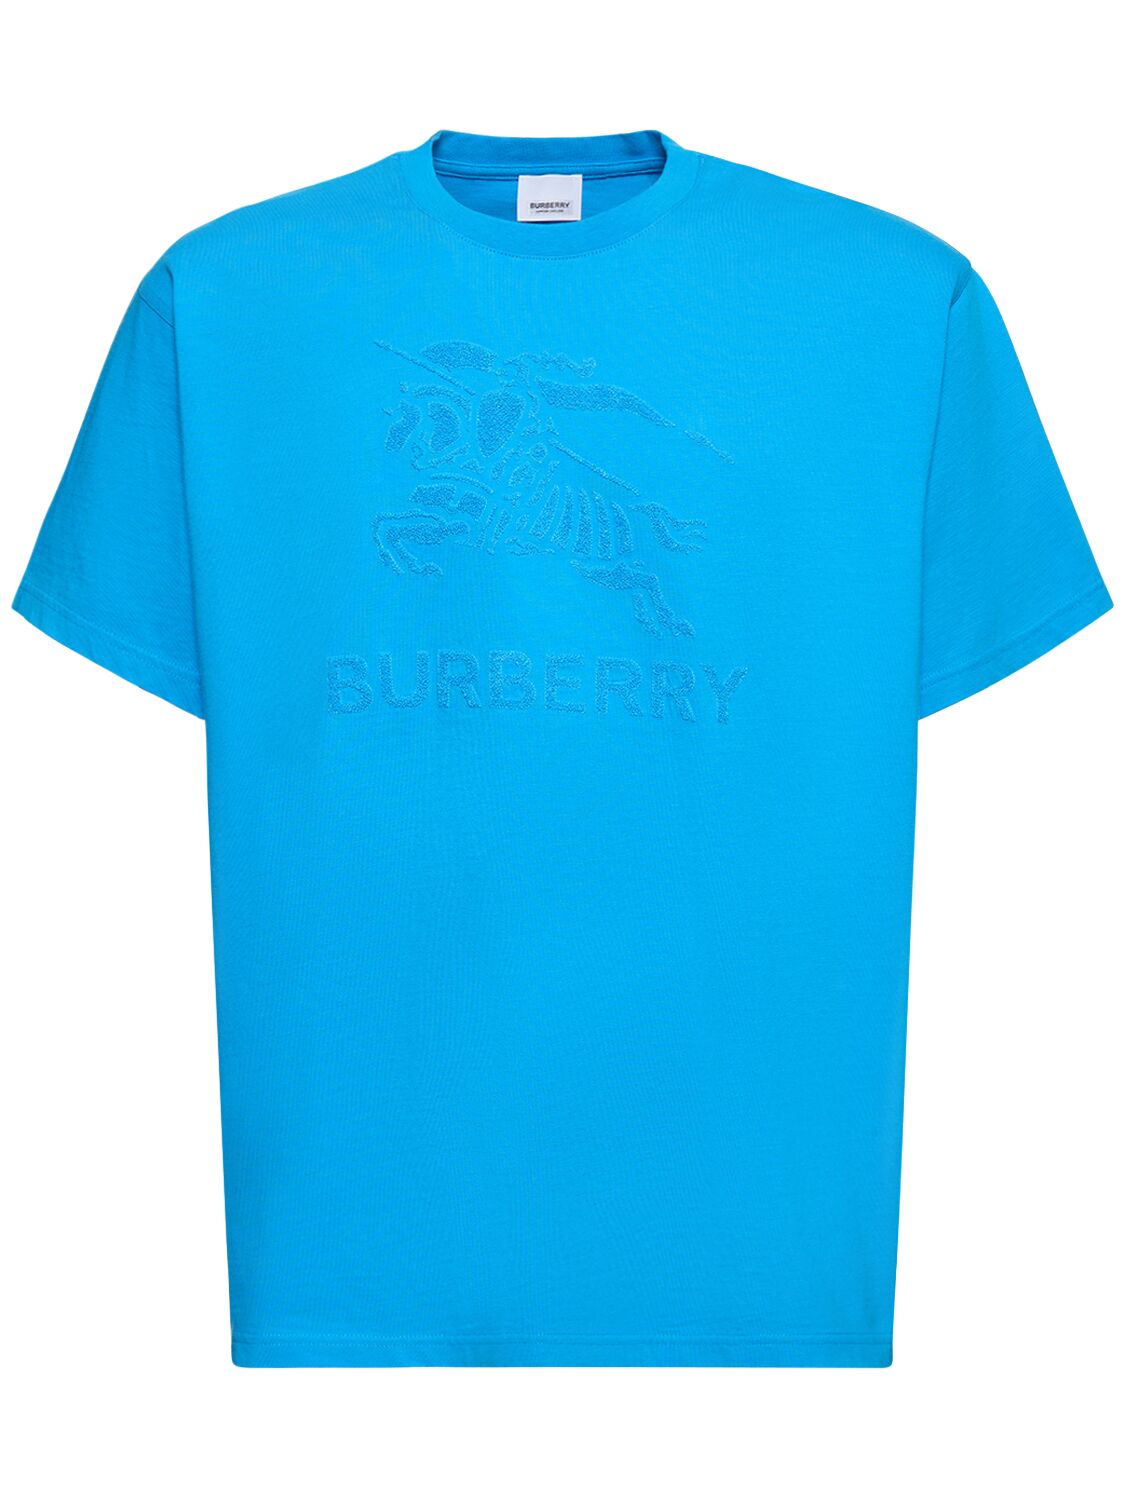 Image of Raynerton Cotton Jersey T-shirt